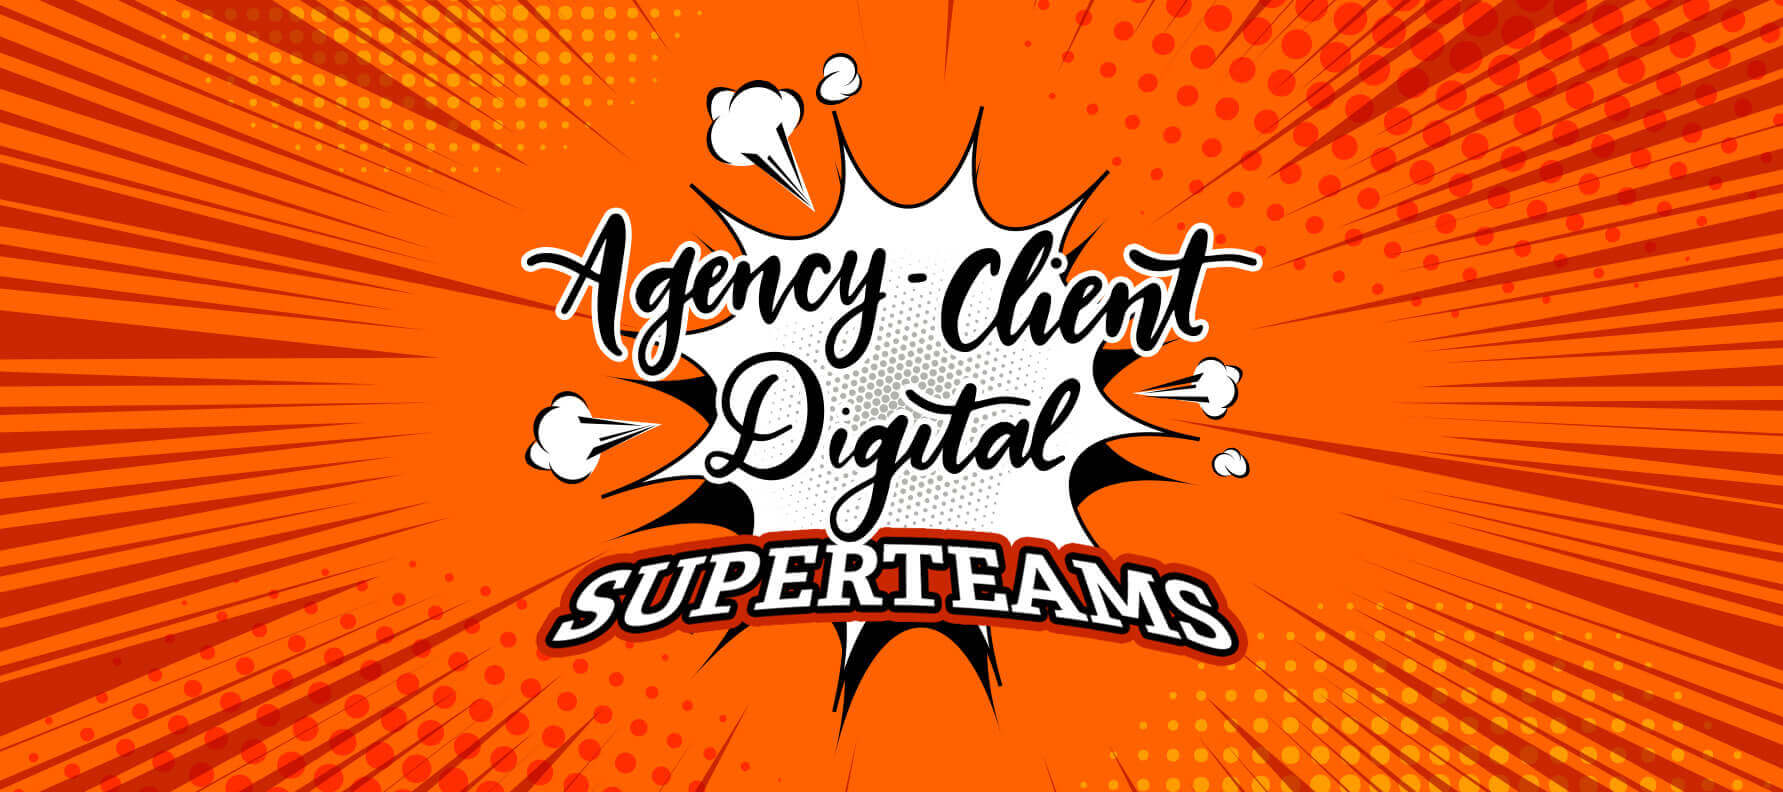 Agency-Client Digital Superteams